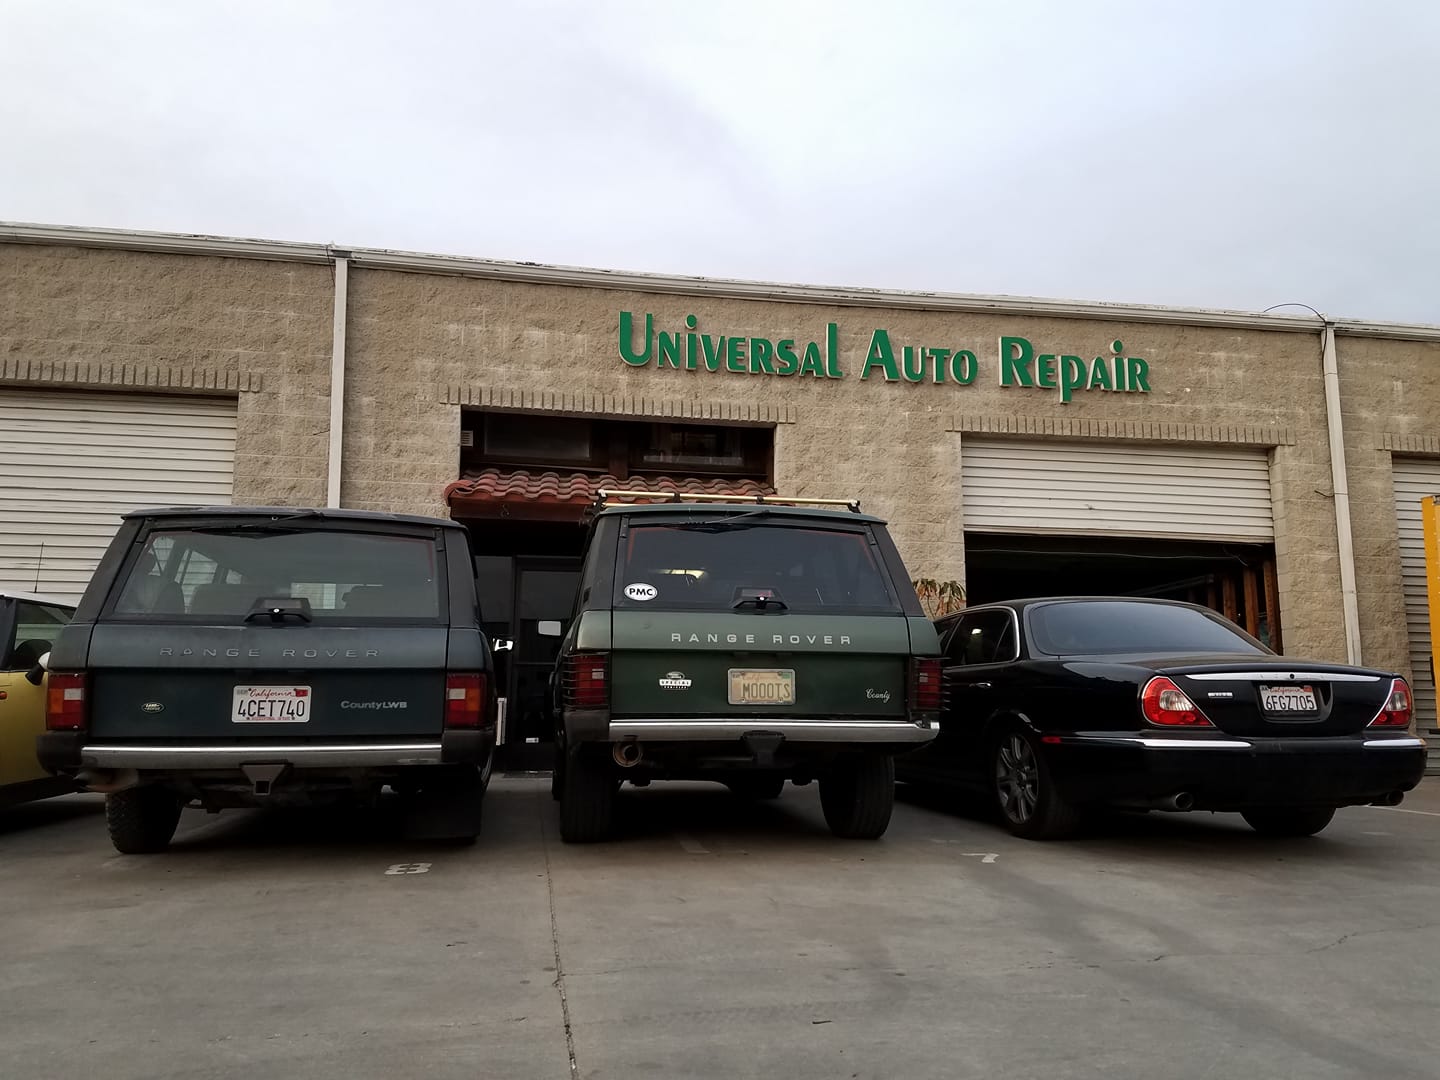 Universal Auto Repair